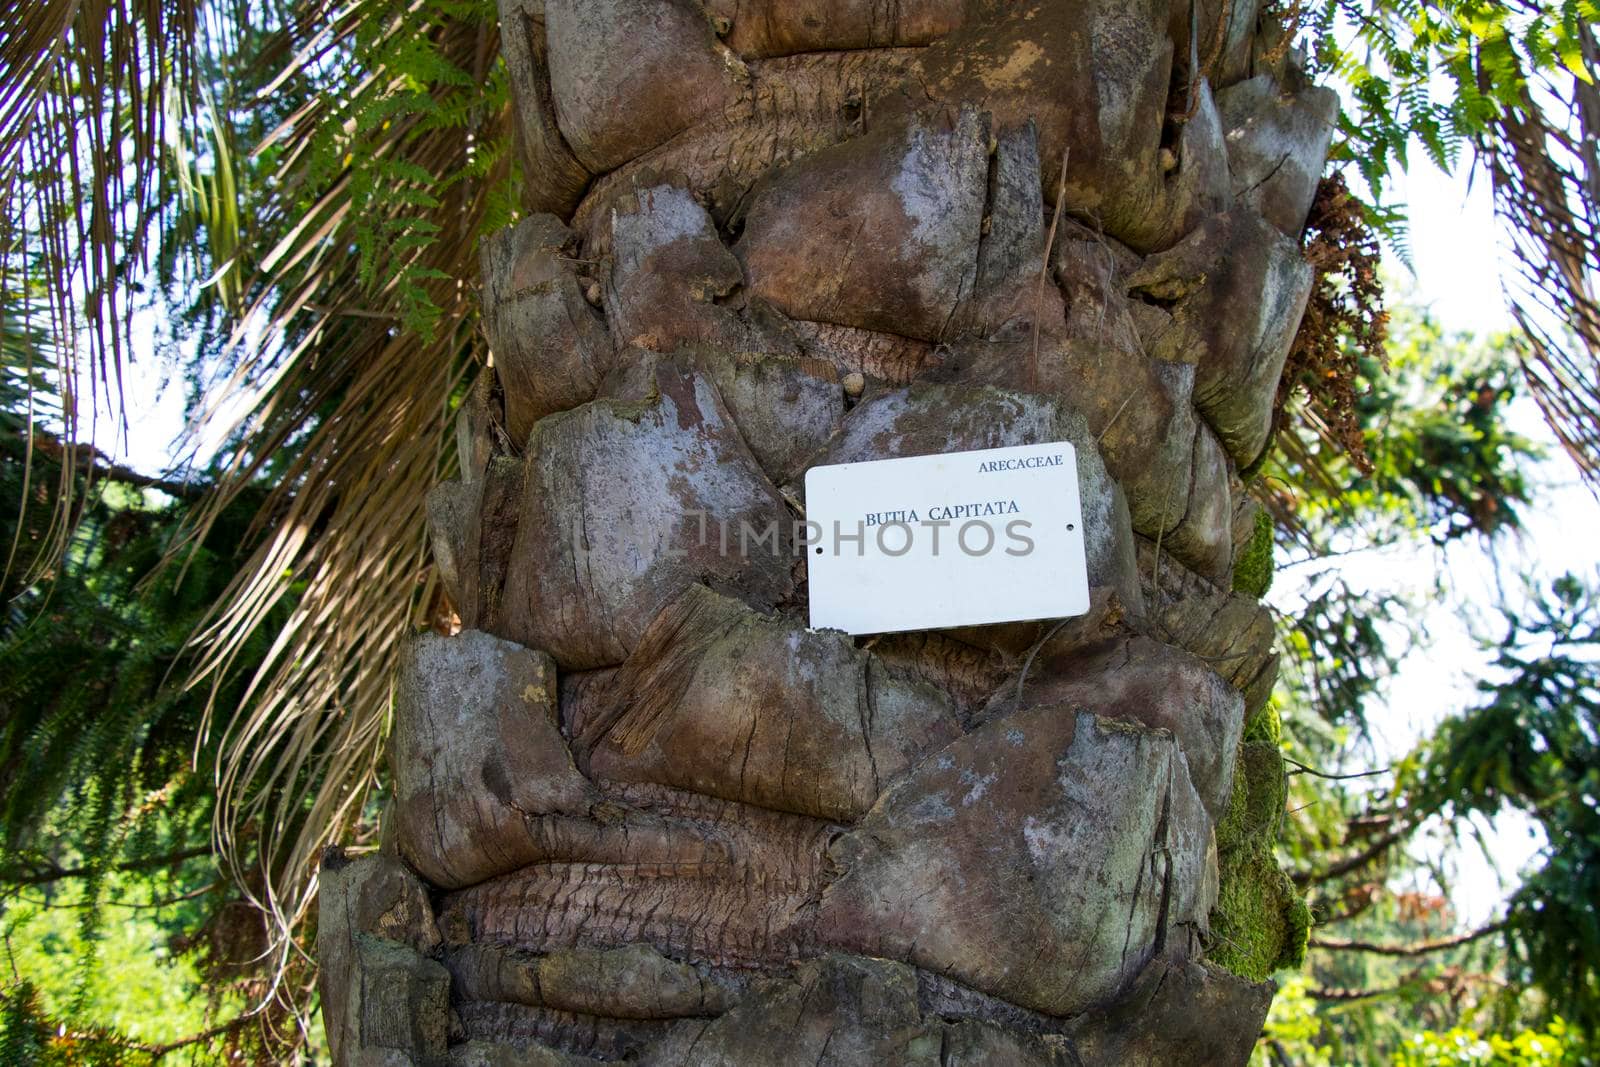 Butia Capitata palm tree in botanic garden by Taidundua